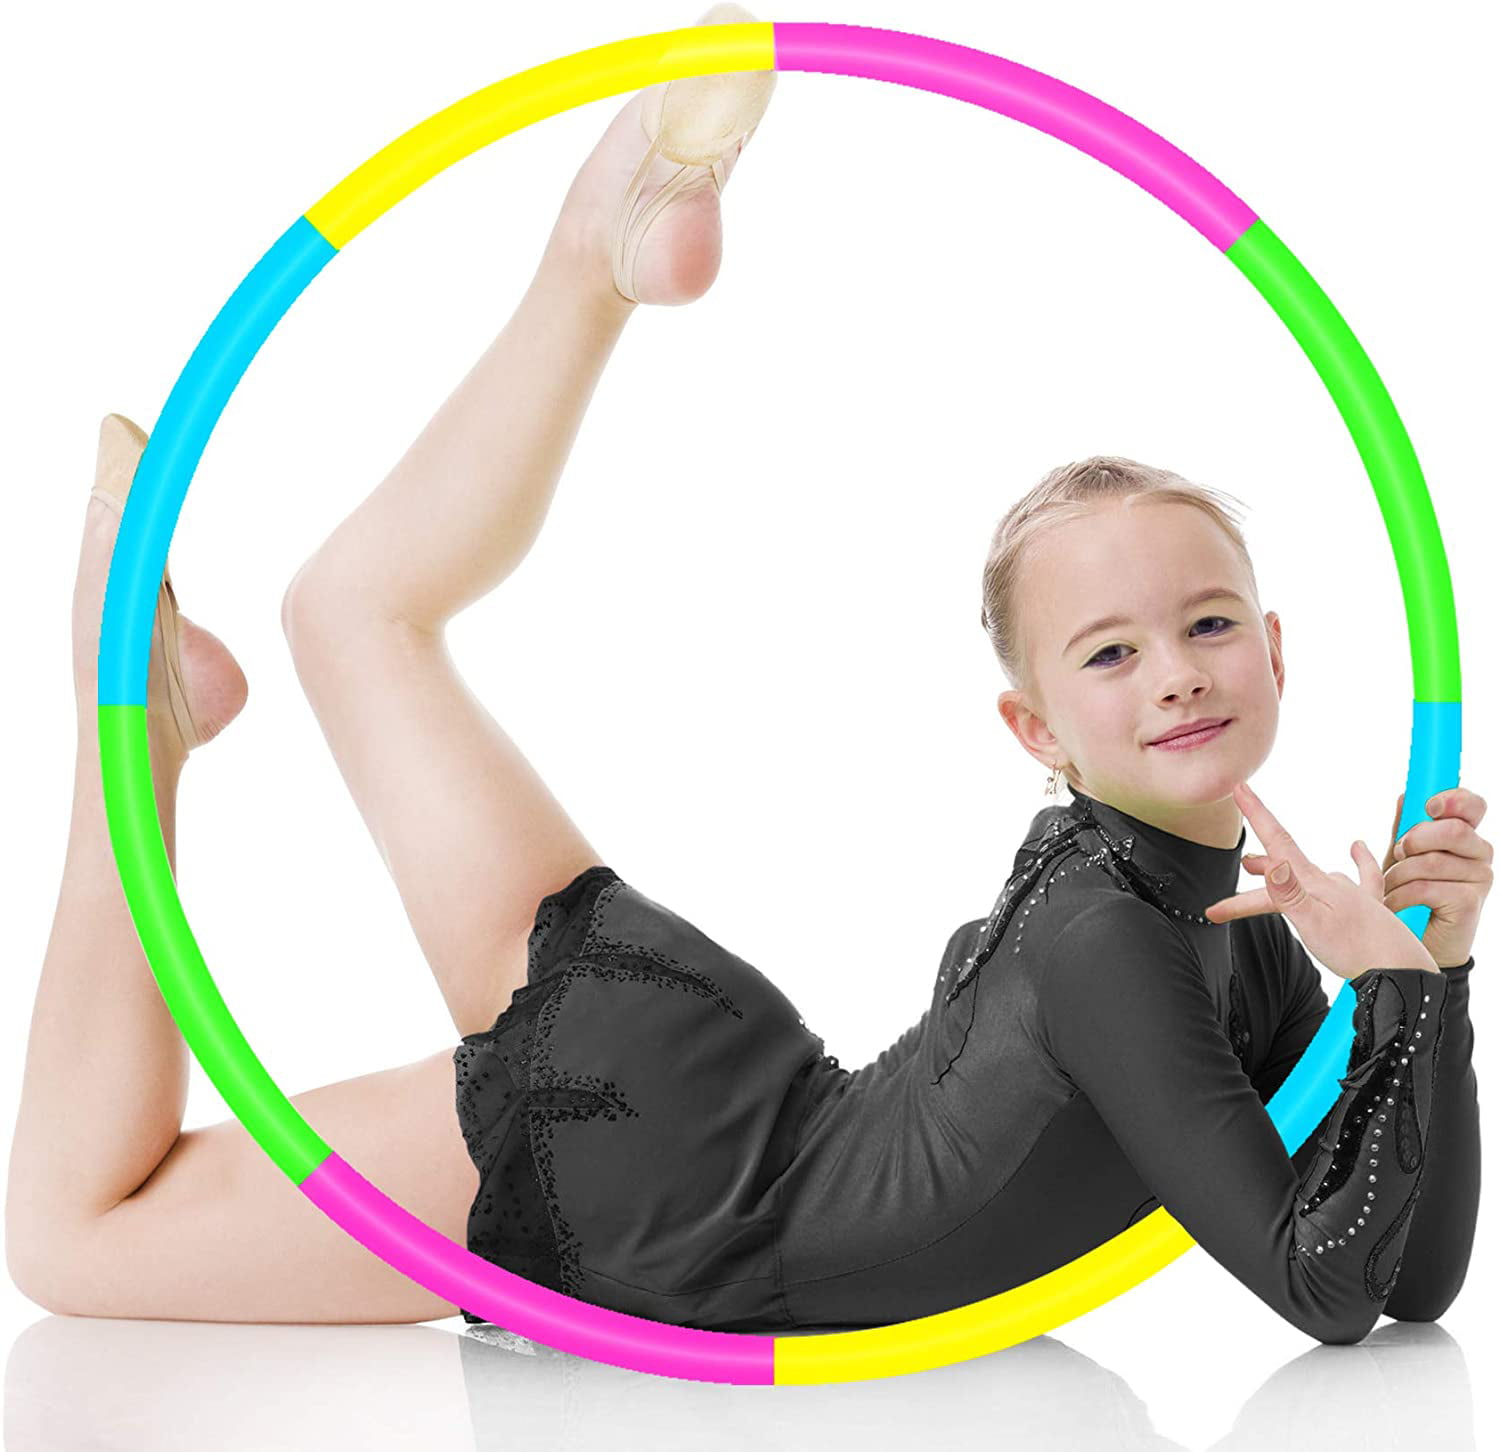 Details about   Multicolour Hula Hoop Children's Adult Fitness Activity Plastic Hoola Hoop Kids 